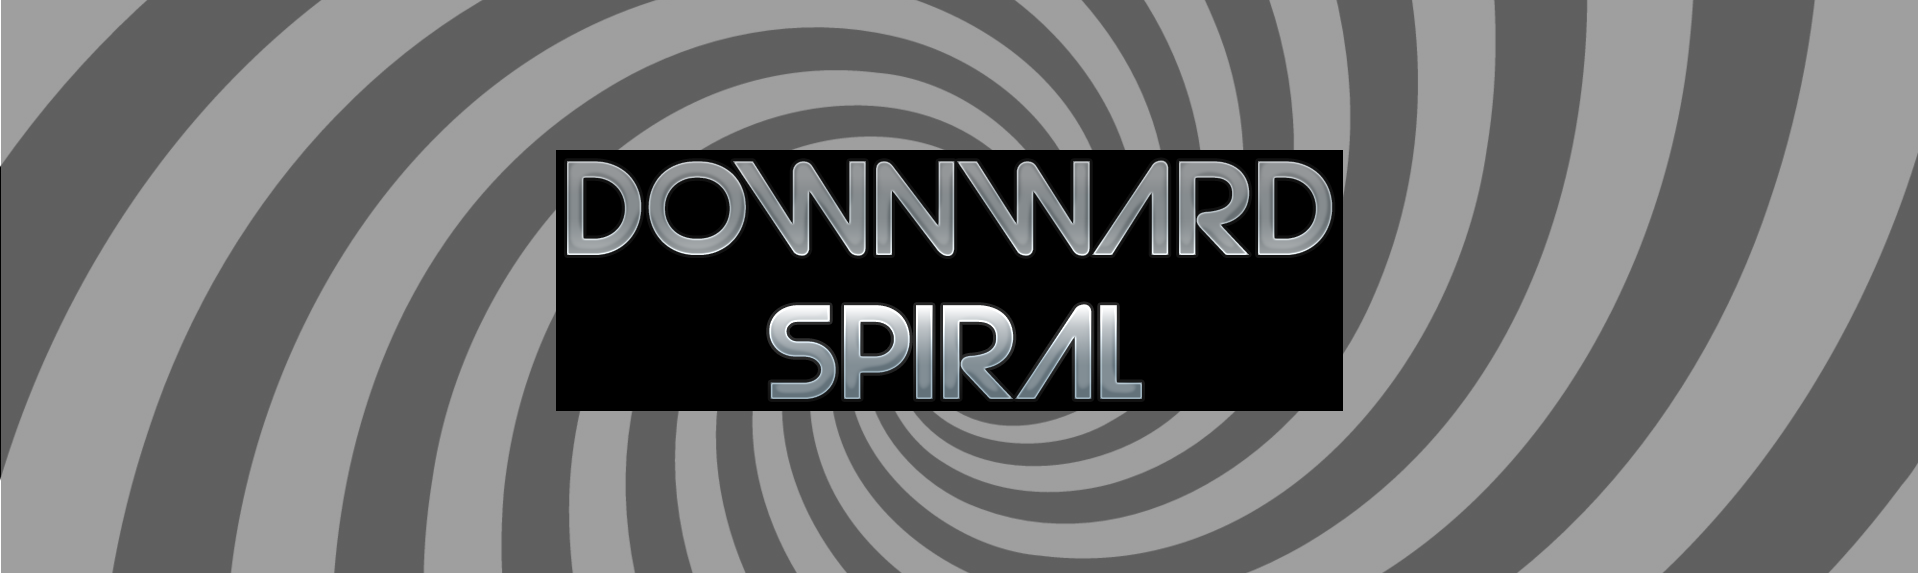 Downward Sprial